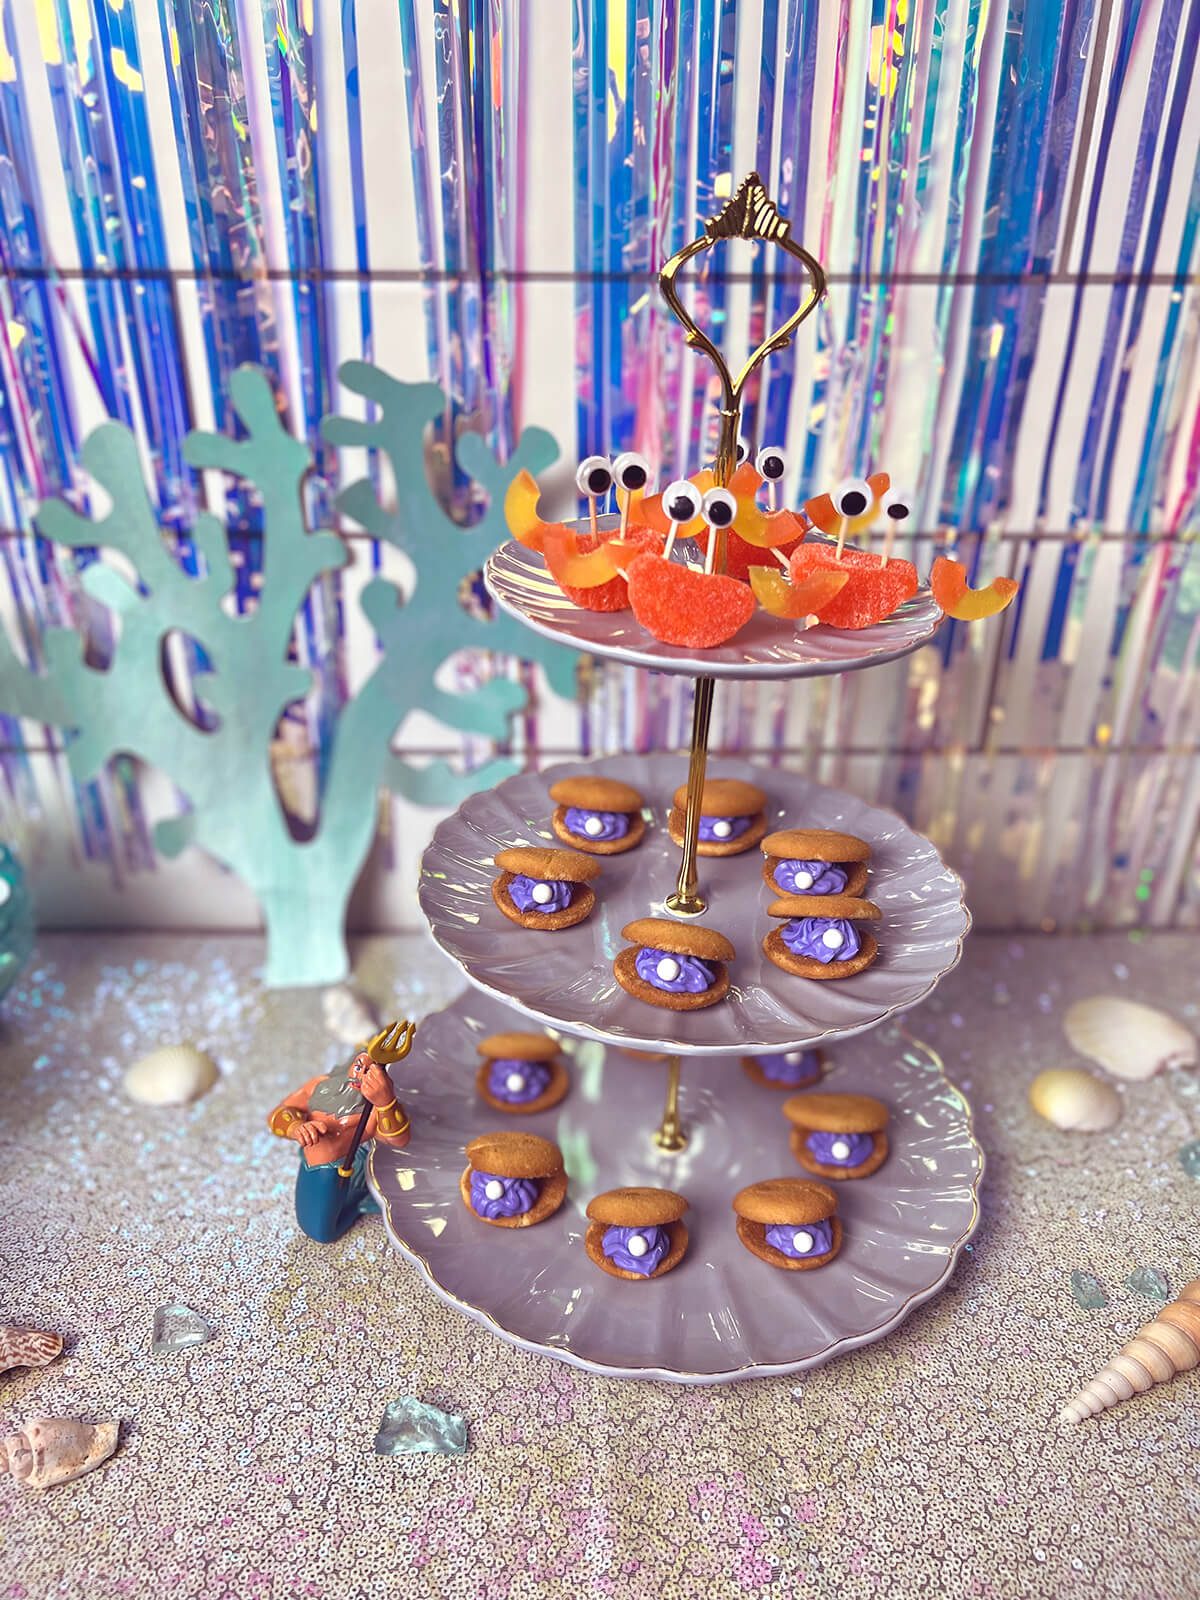 22 Fun Mermaid-Themed Party Ideas - Invitations, Decorations & Activities